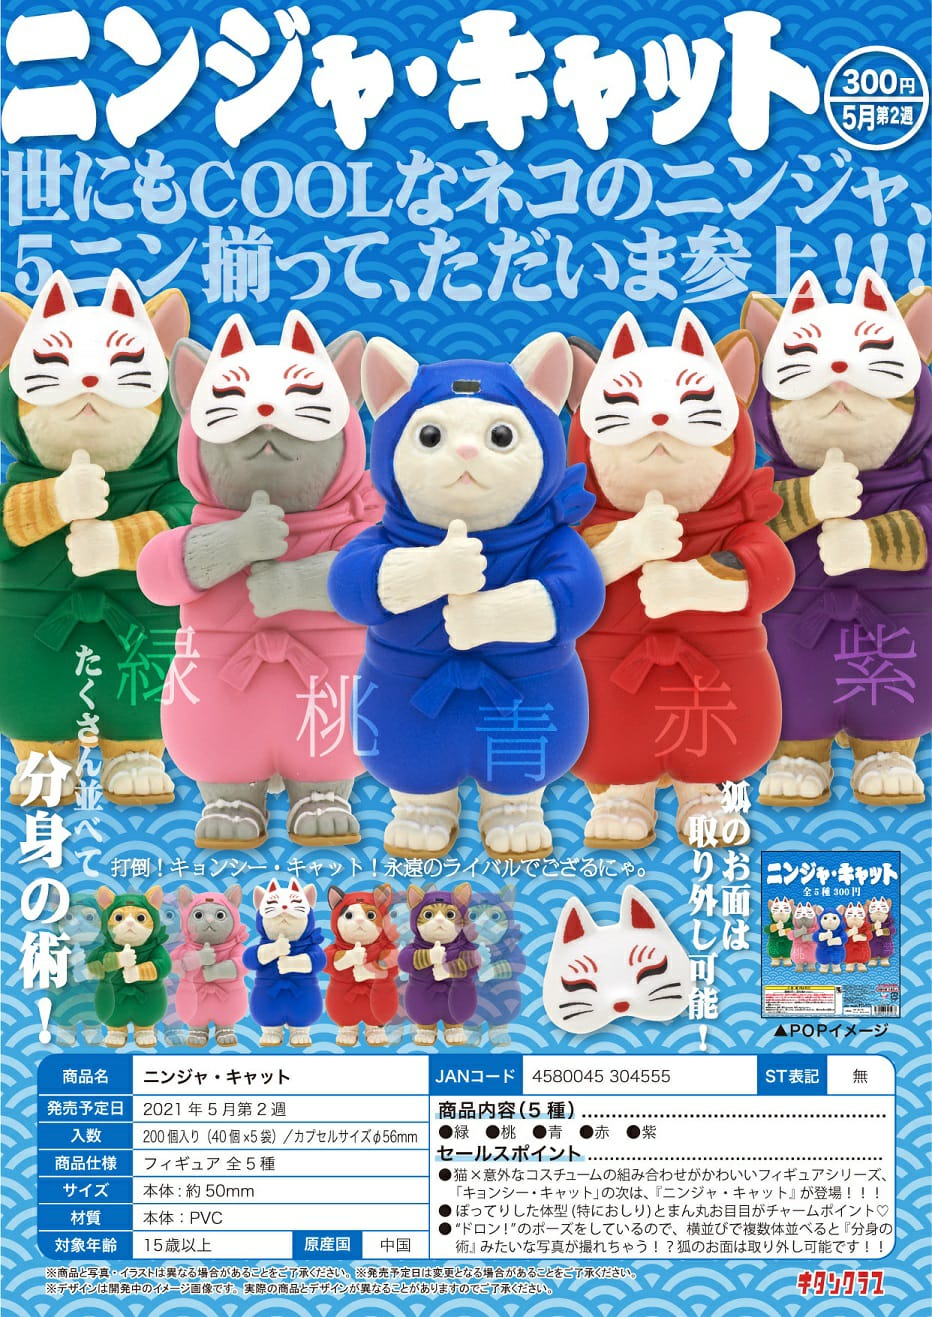 Kitan Club Ninja Cat Capsule Gashapon Toy Complete Figures set of 5